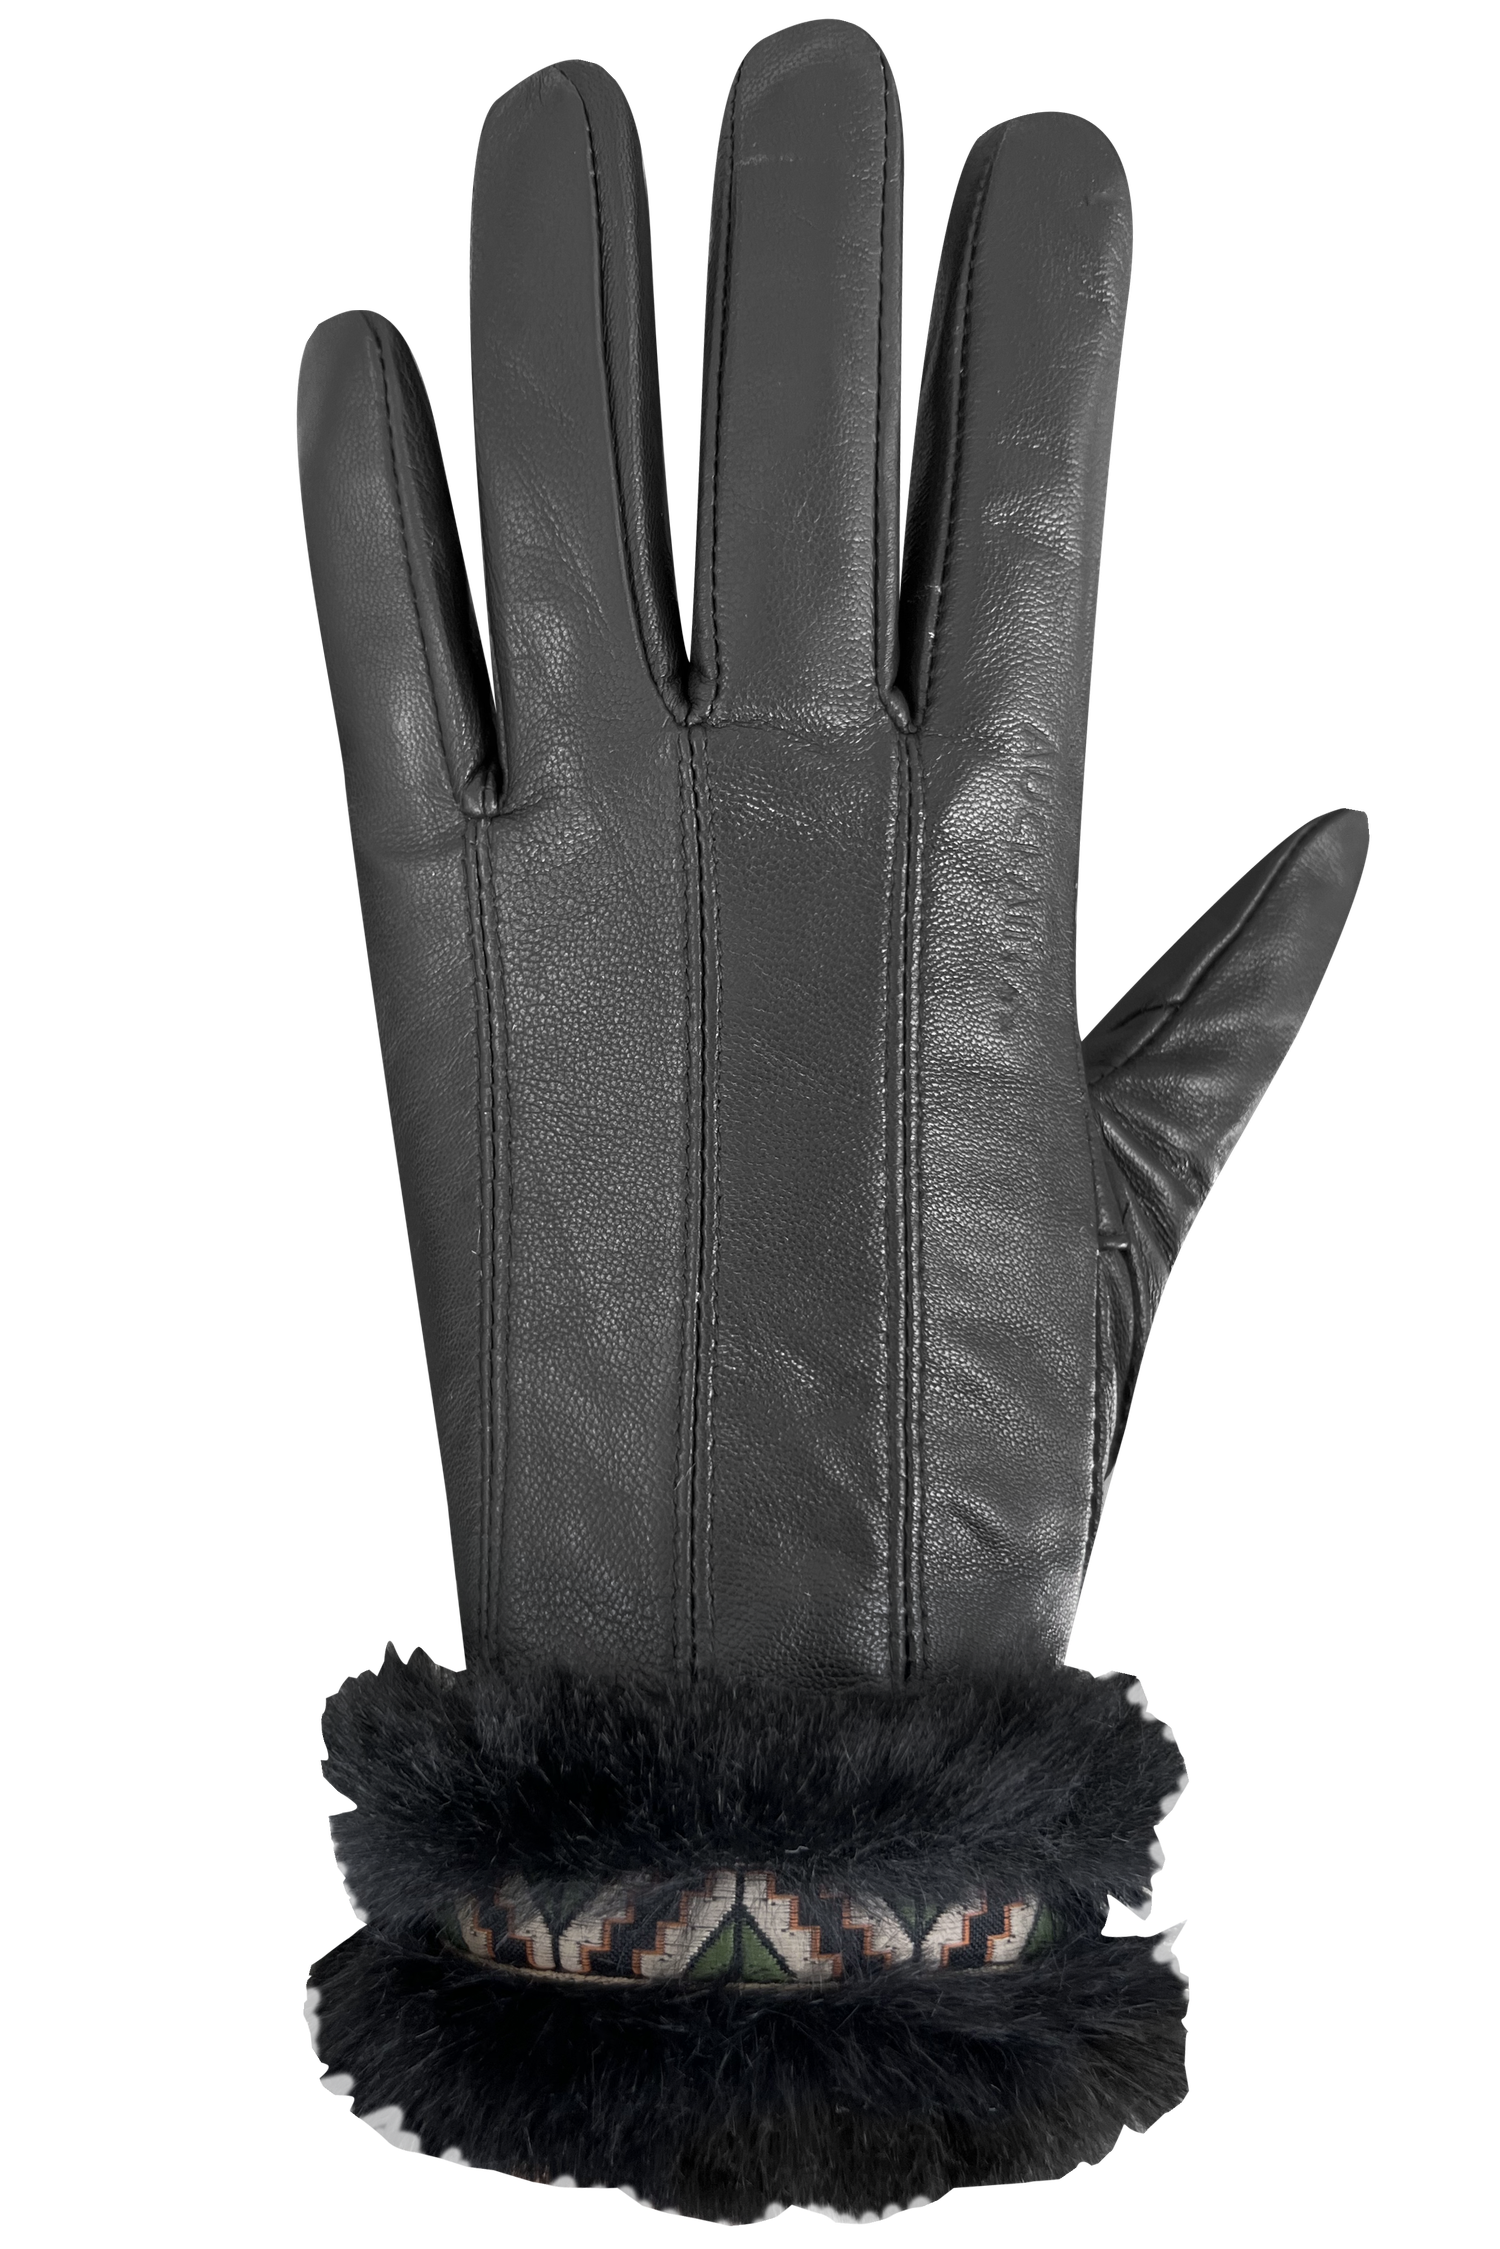 Daphnee II Gloves - Women, Black/Black